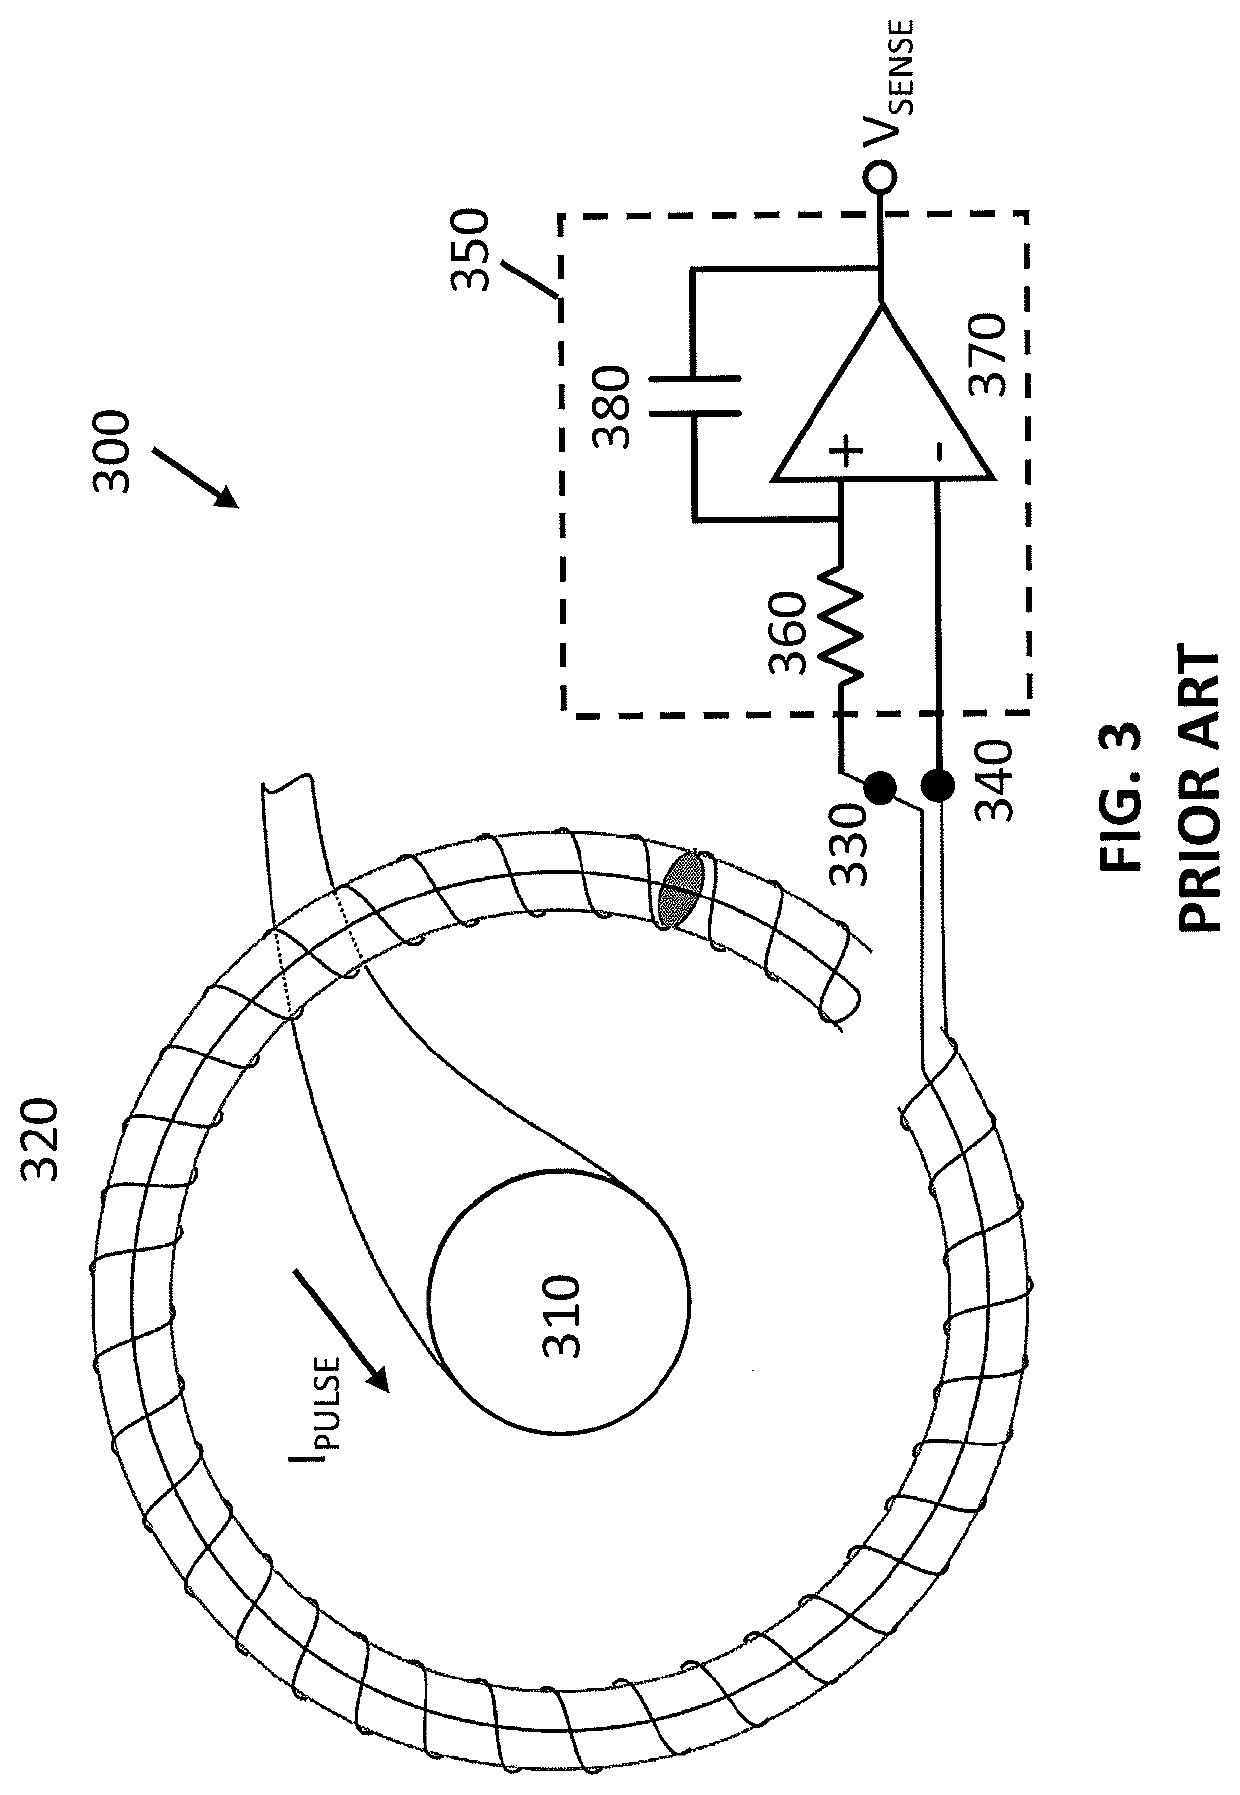 Magnetic field pulse current sensing for timing-sensitive circuits